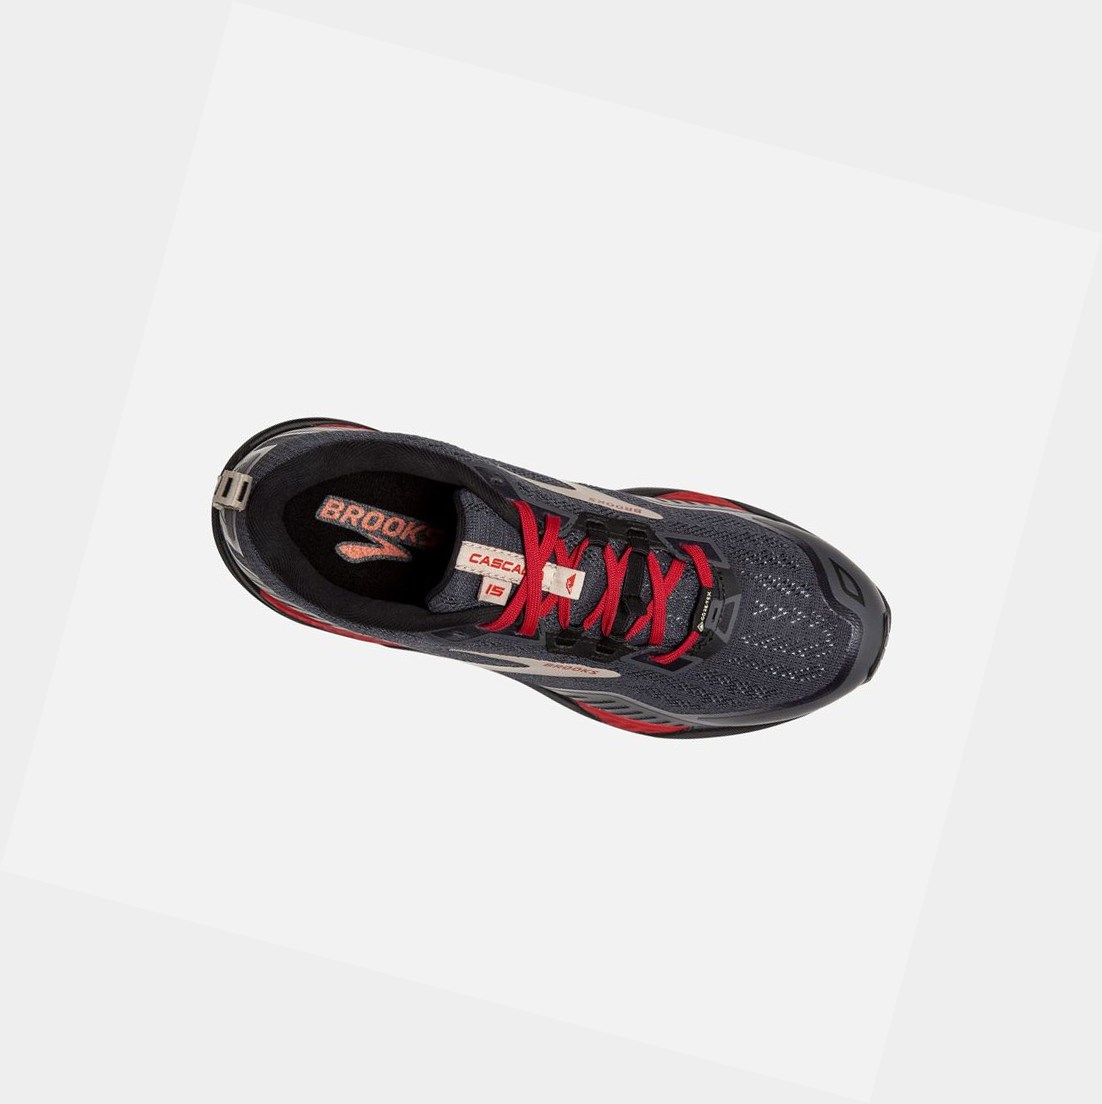 Brooks Cascadia 15 GTX Men's Trail Shoes Black / Ebony / Red | SULV-30725